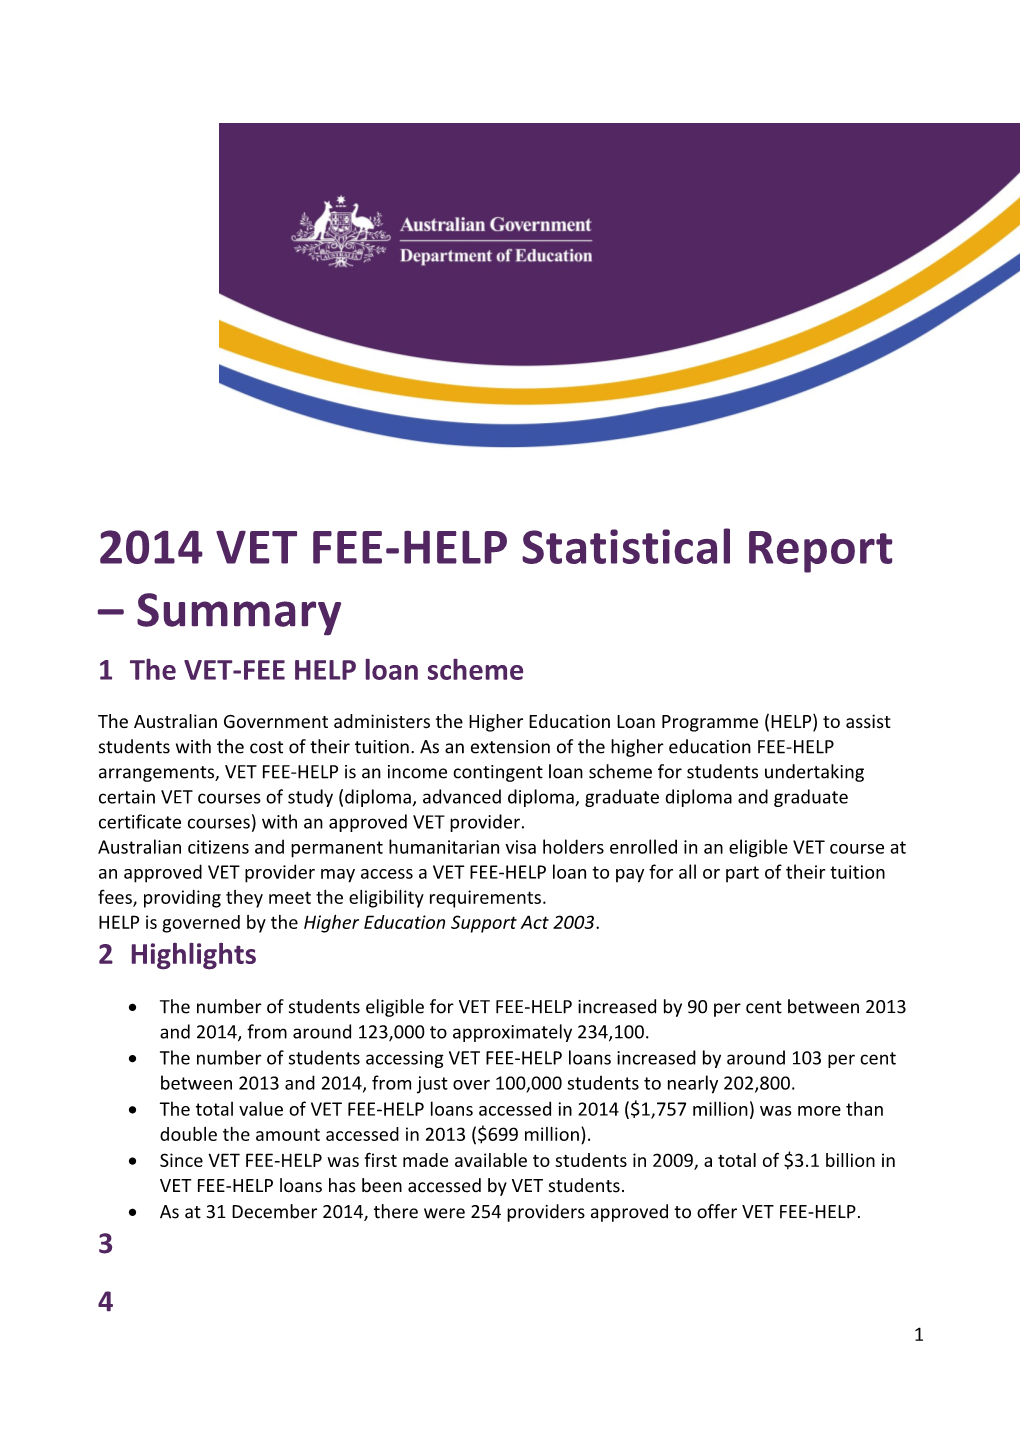 2014 VET FEE-HELP Statistical Report Summary